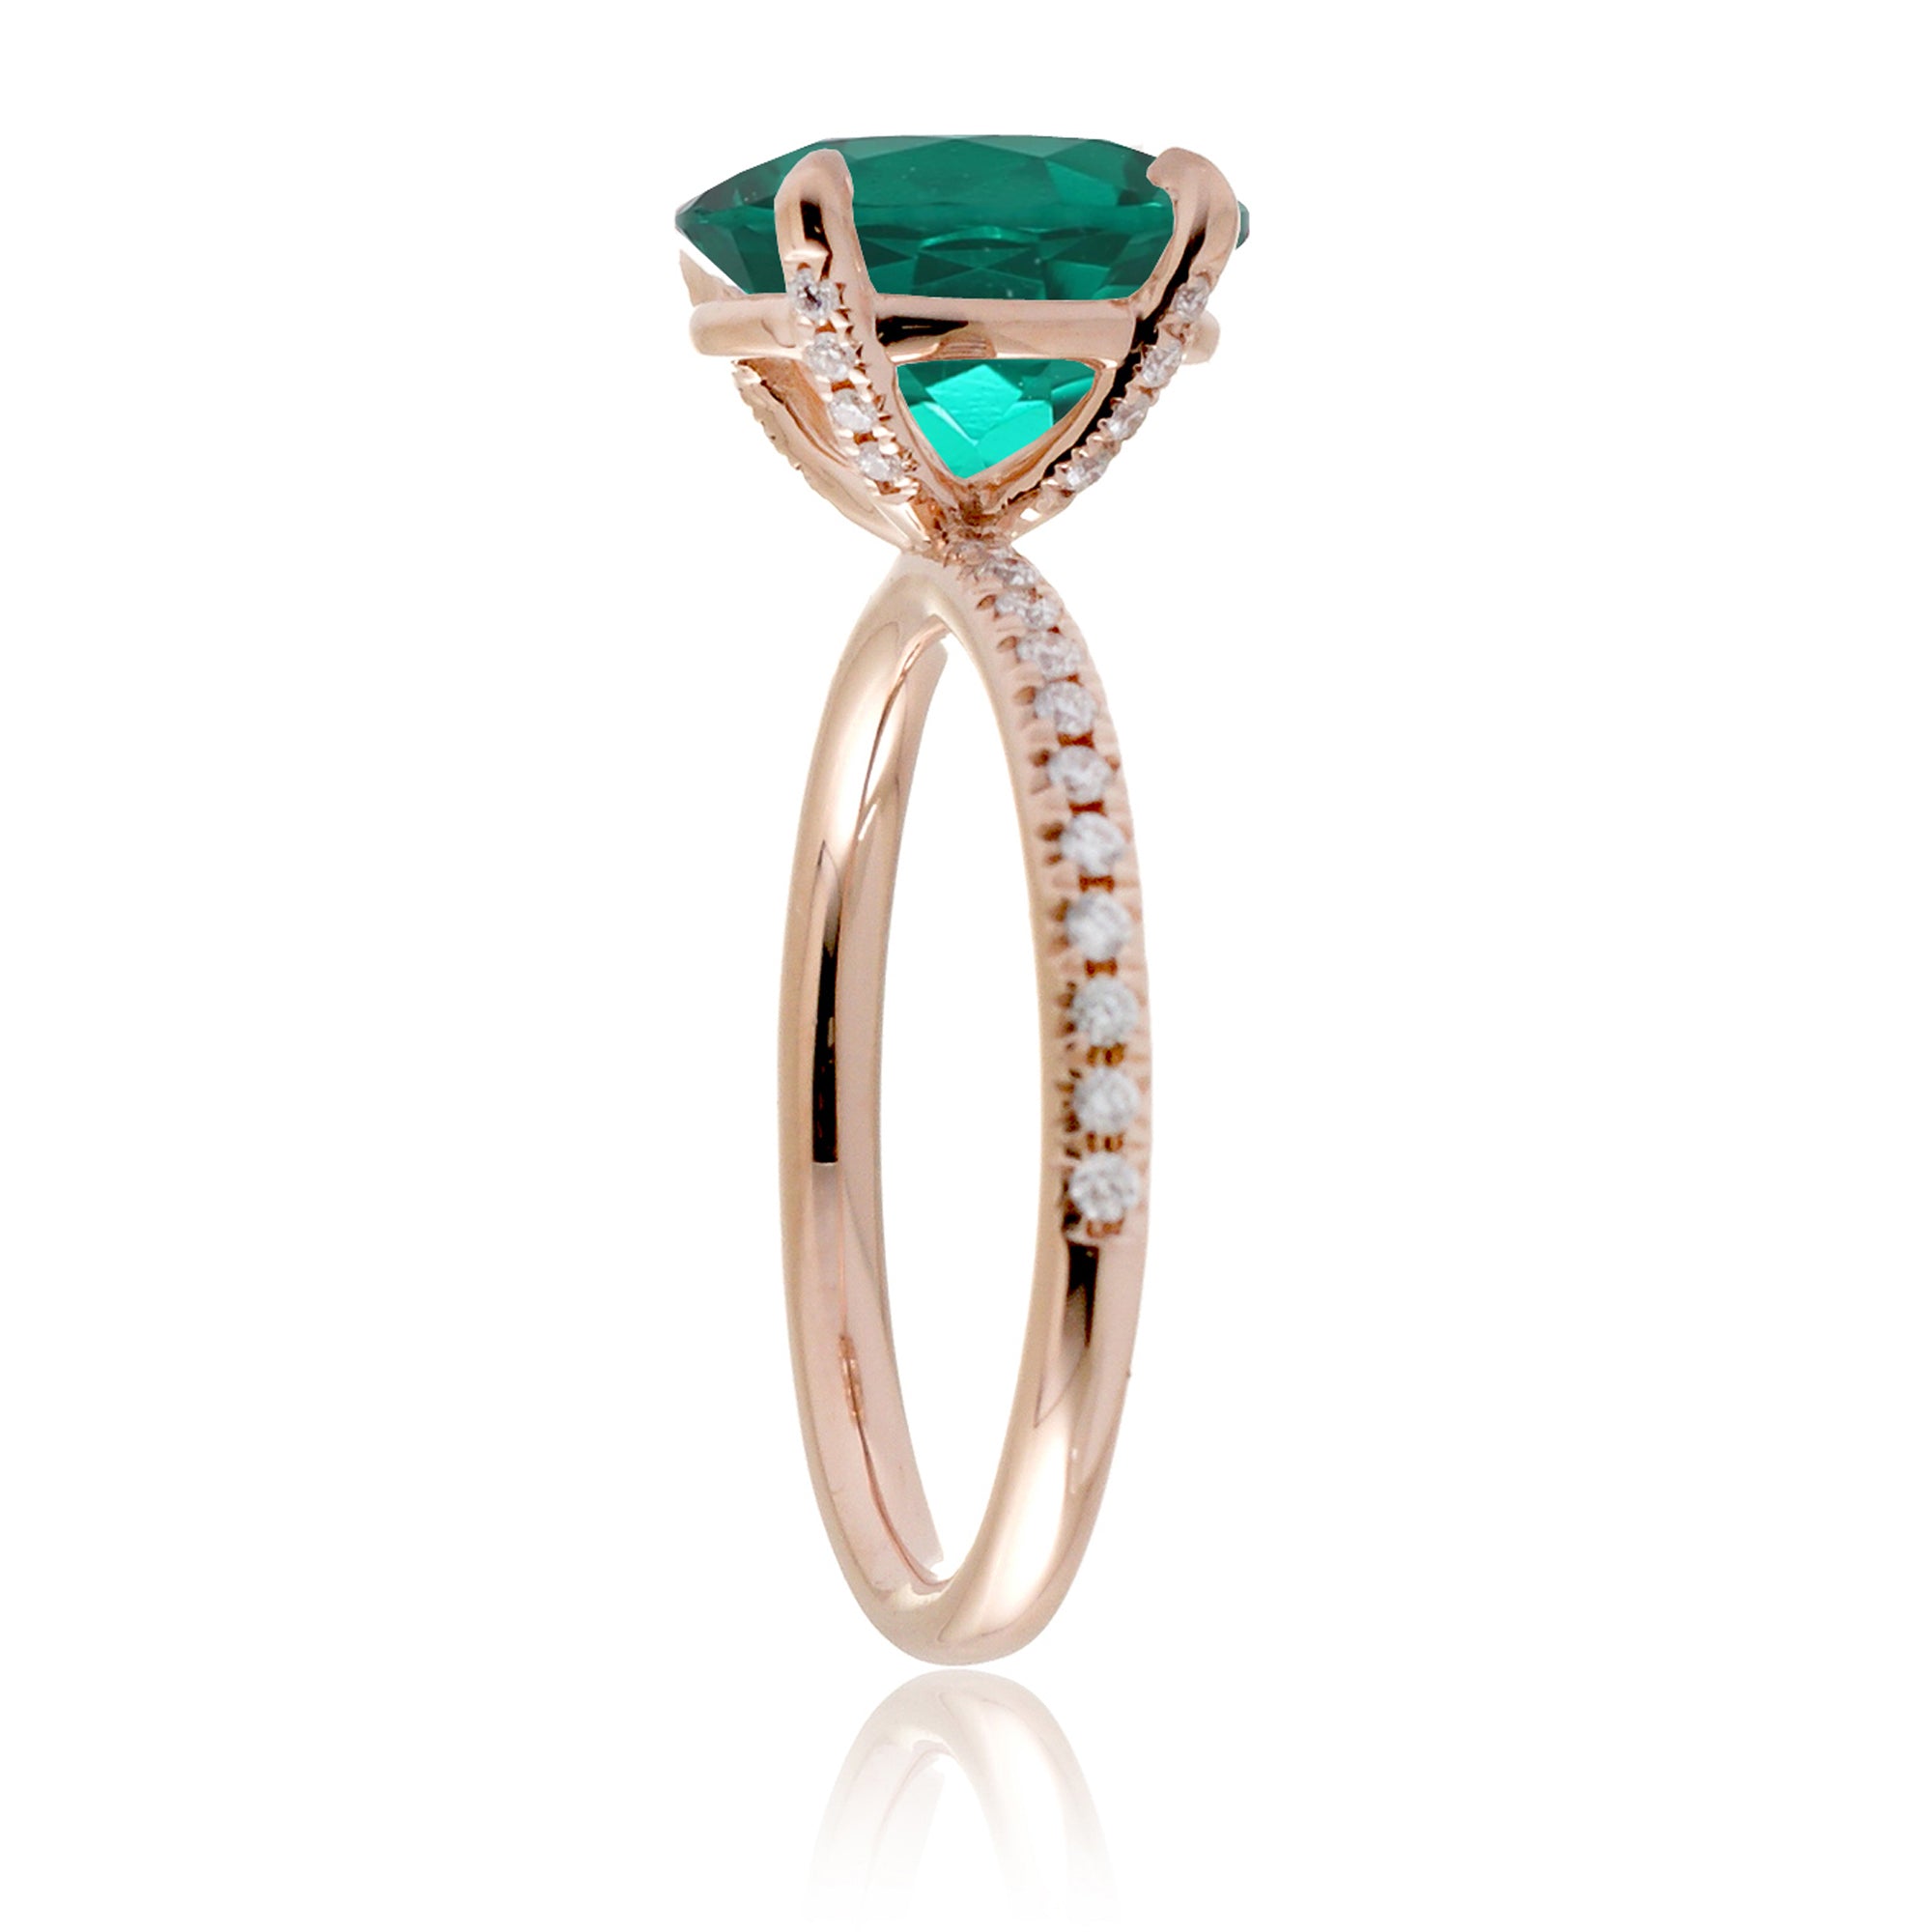 The Ava Princess Cut Emerald Ring (Lab Grown)